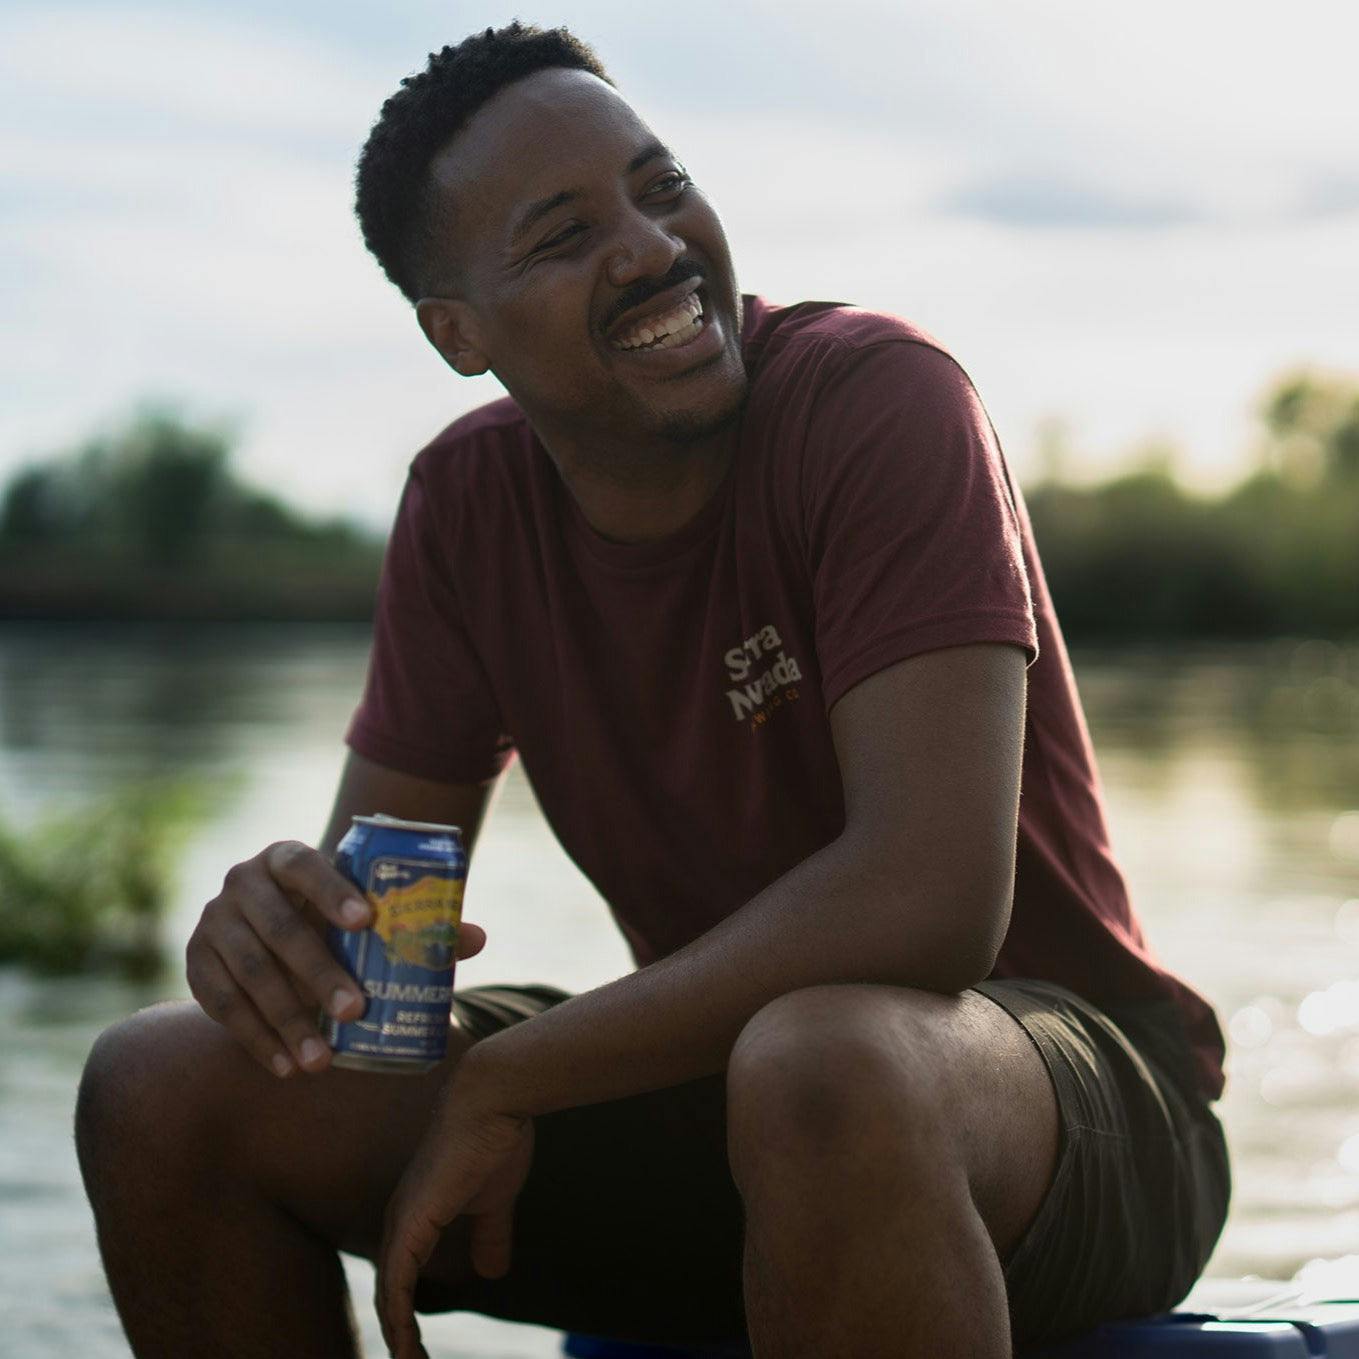 Sierra Nevada Brewing Co. Trail T-Shirt worn by a man sitting on a cooler by a river enjoying a Summerfest beer.